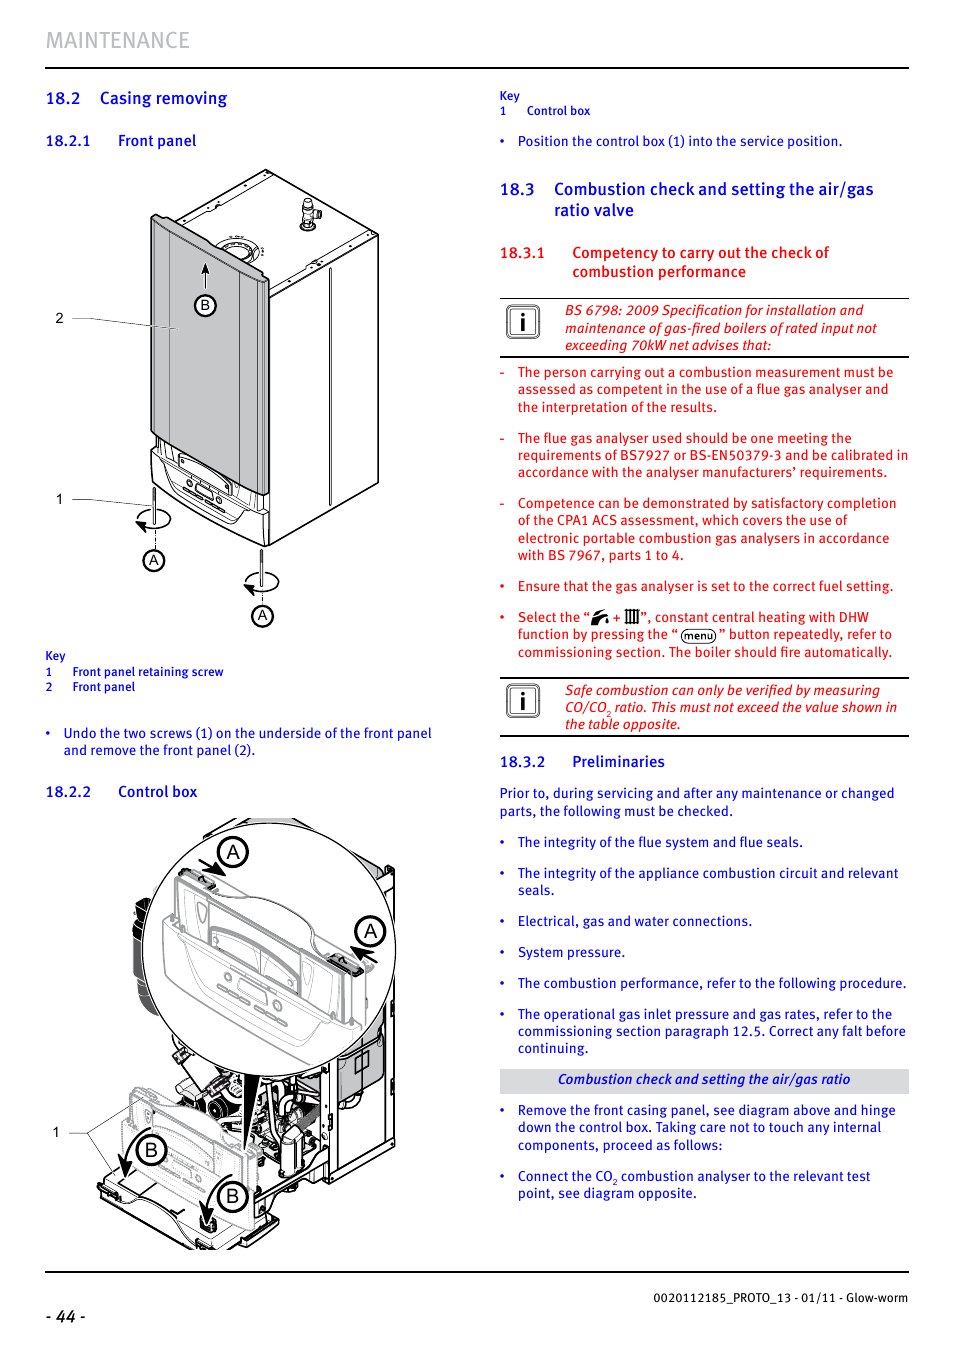 Maintenance, Ab b | Glow-worm Ultracom2 35 Store User Manual | Page 46 / 68